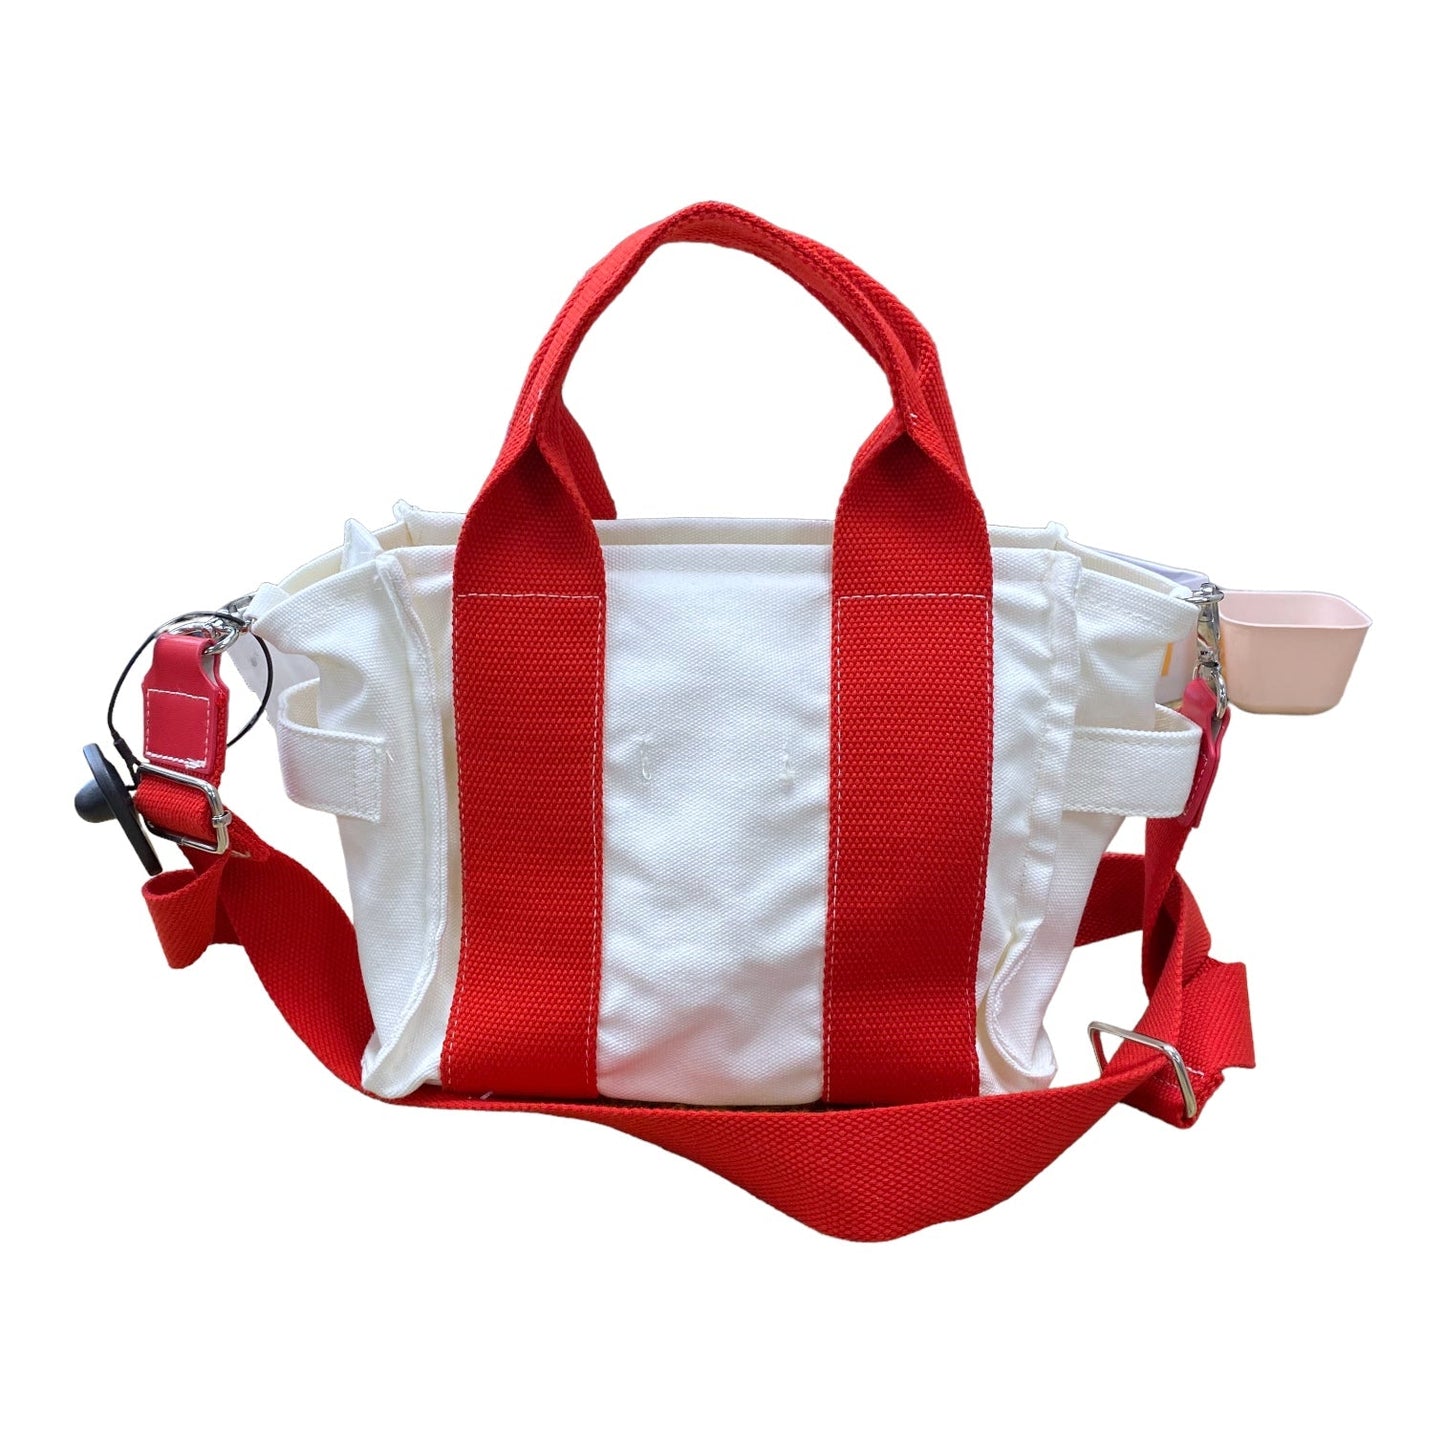 Handbag By ICK  Size: Small